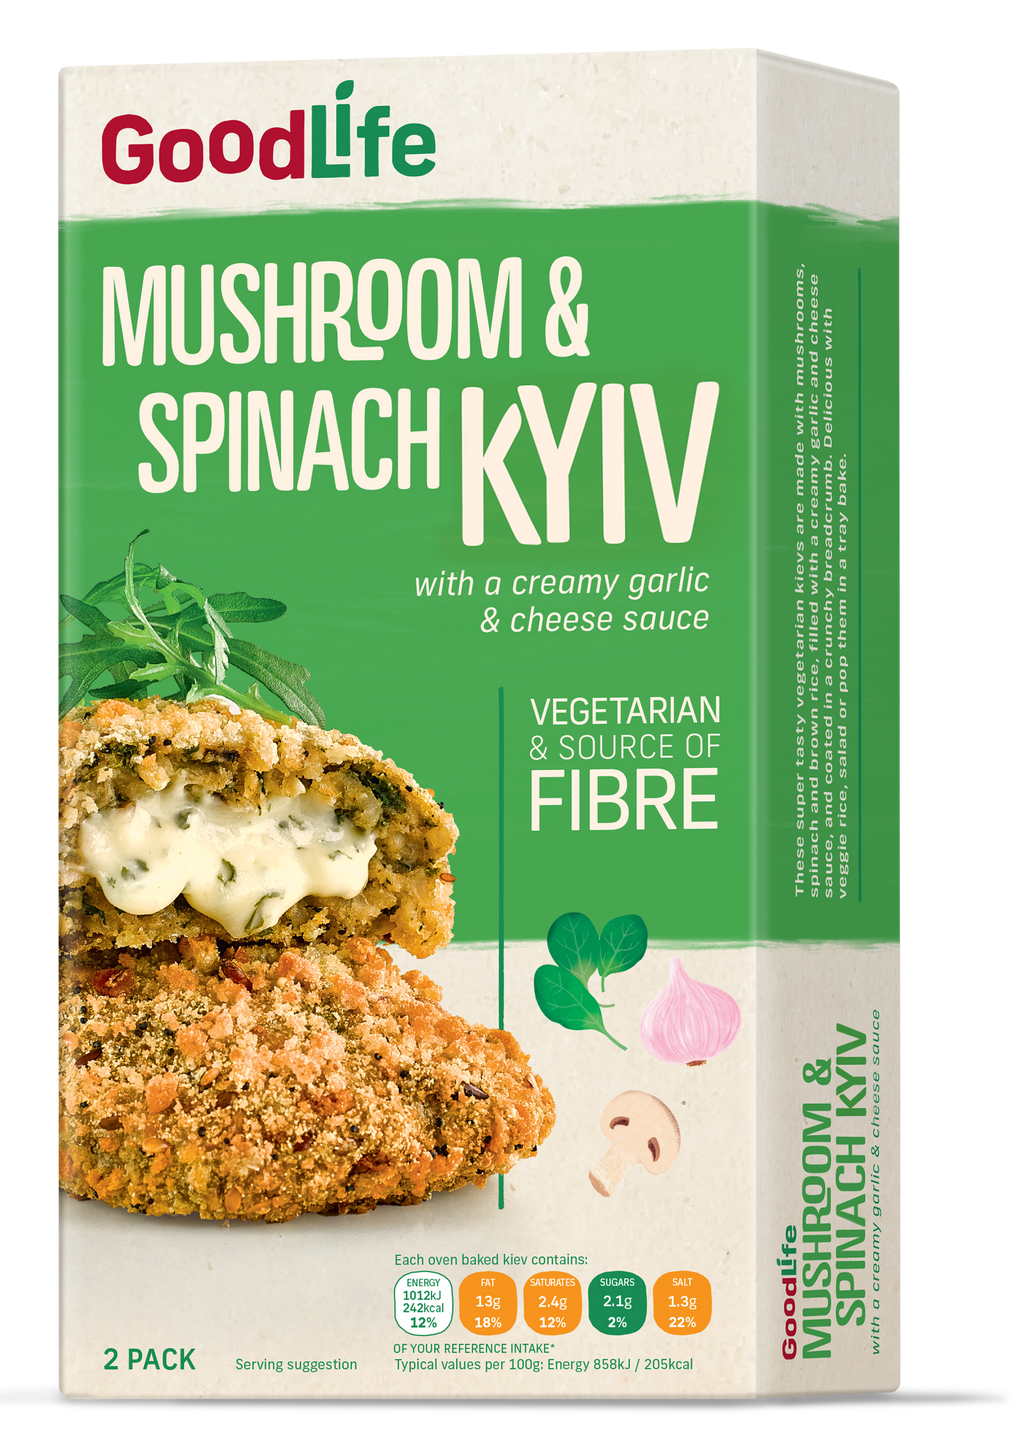 GoodLife - Healthy midweek meals Kyviv